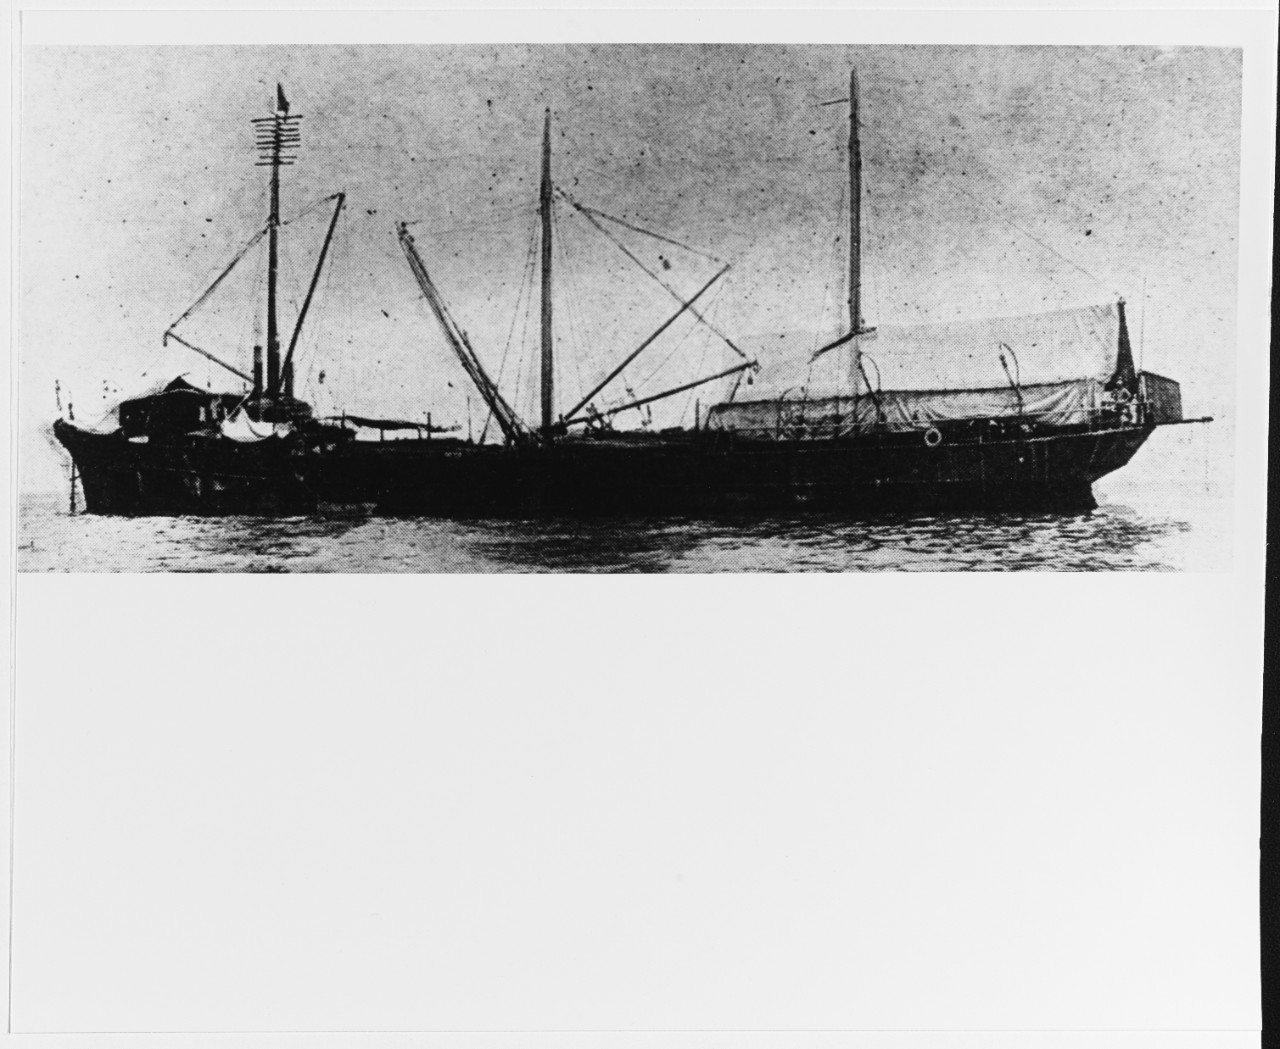 U.S. Navy coal barge No. 1